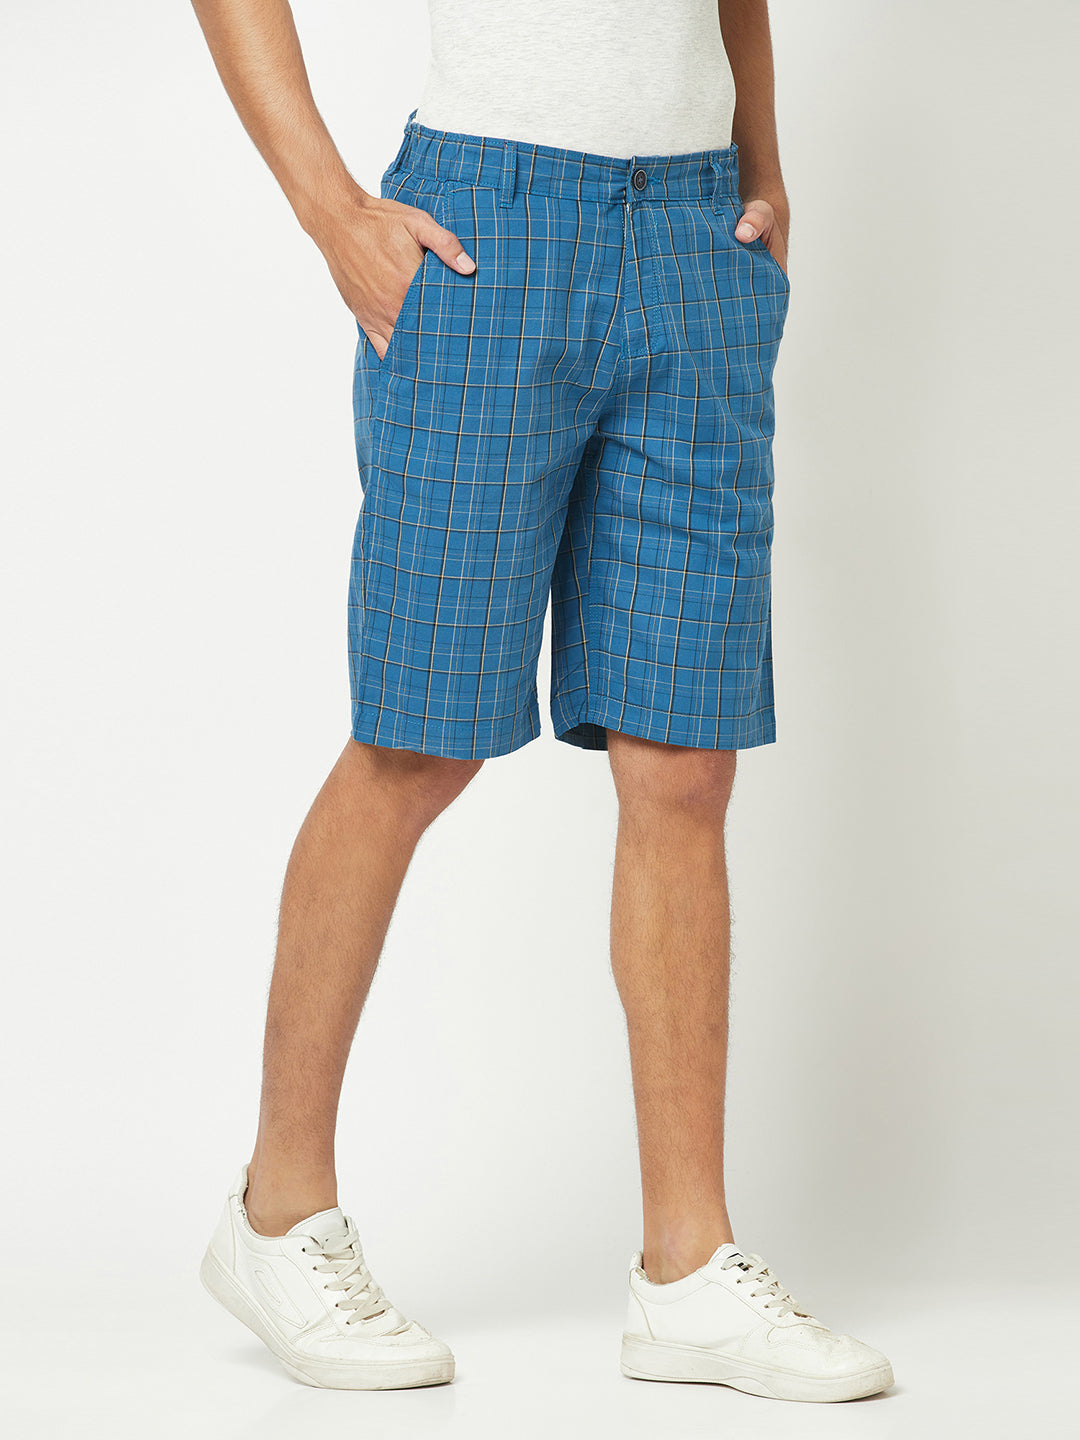  Blue Plaid Shorts 